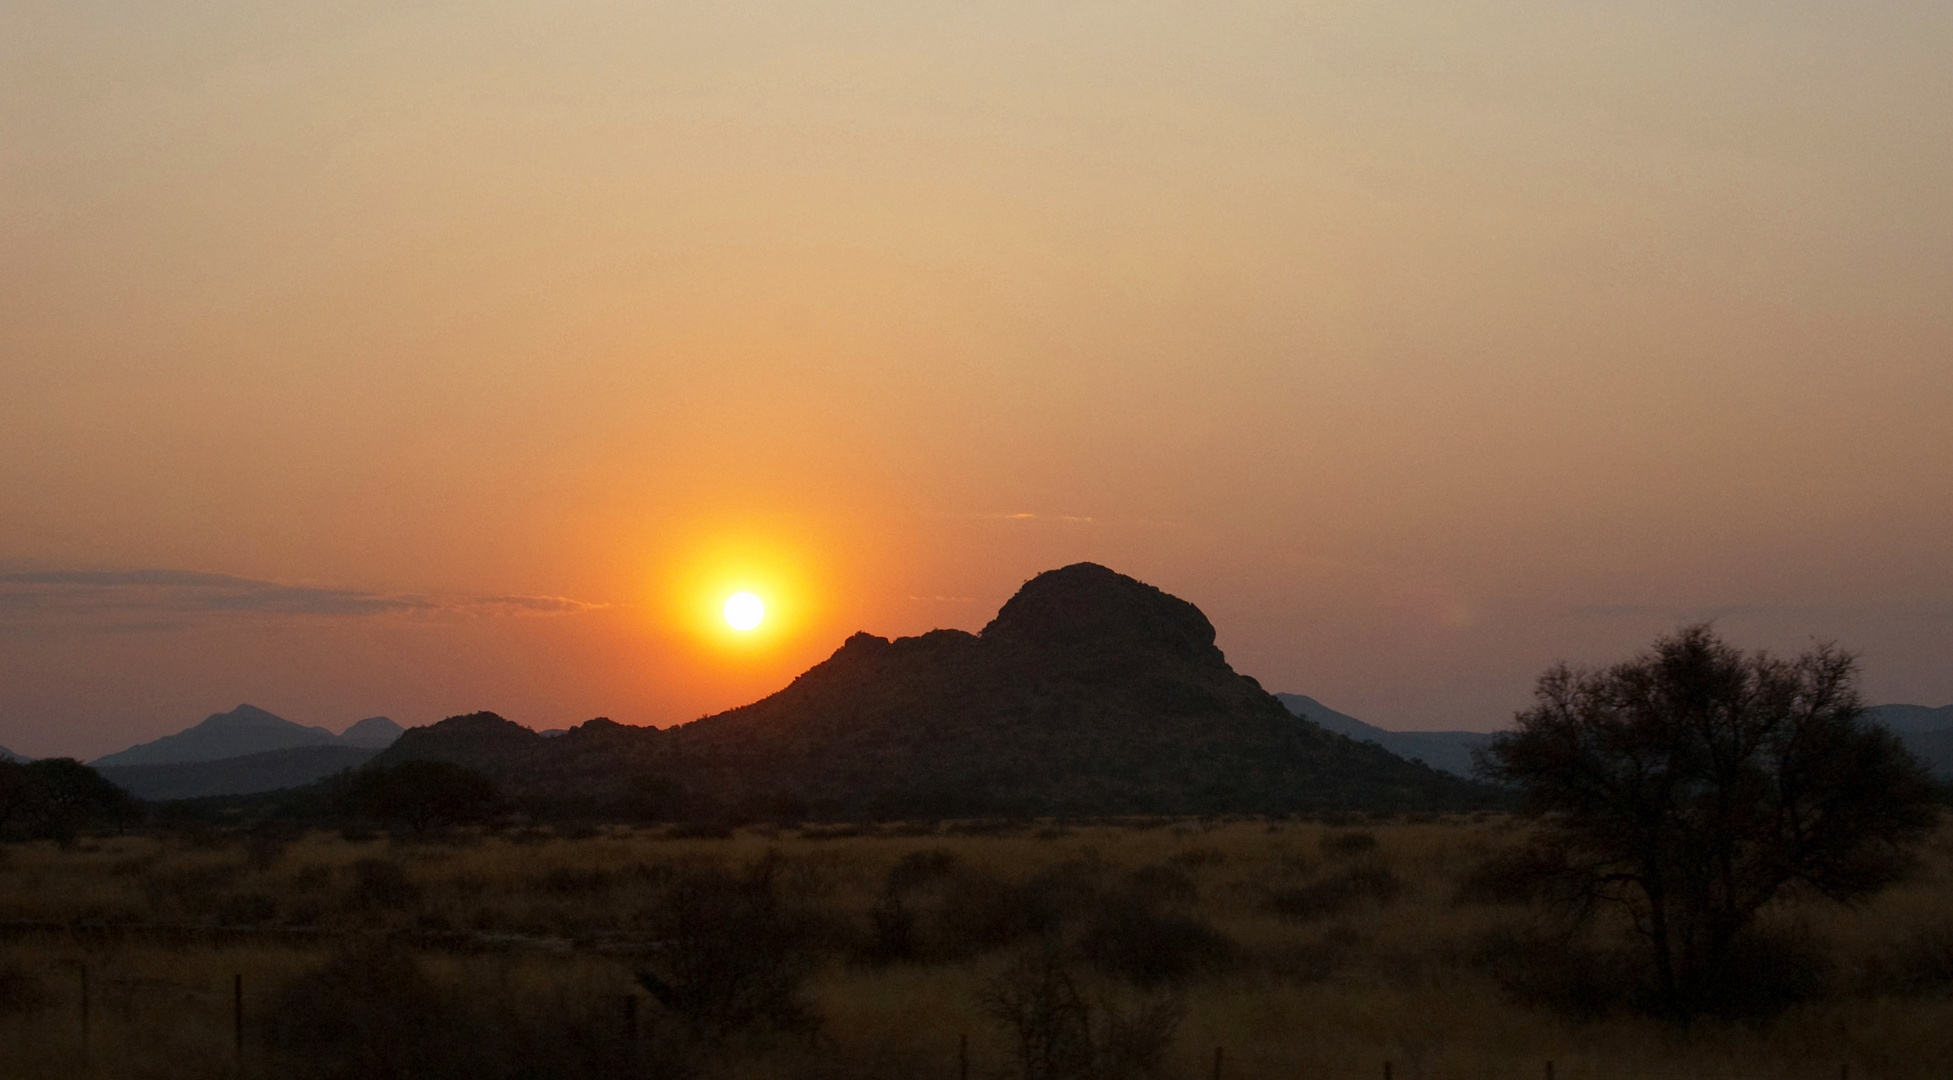 Namibias setting sun